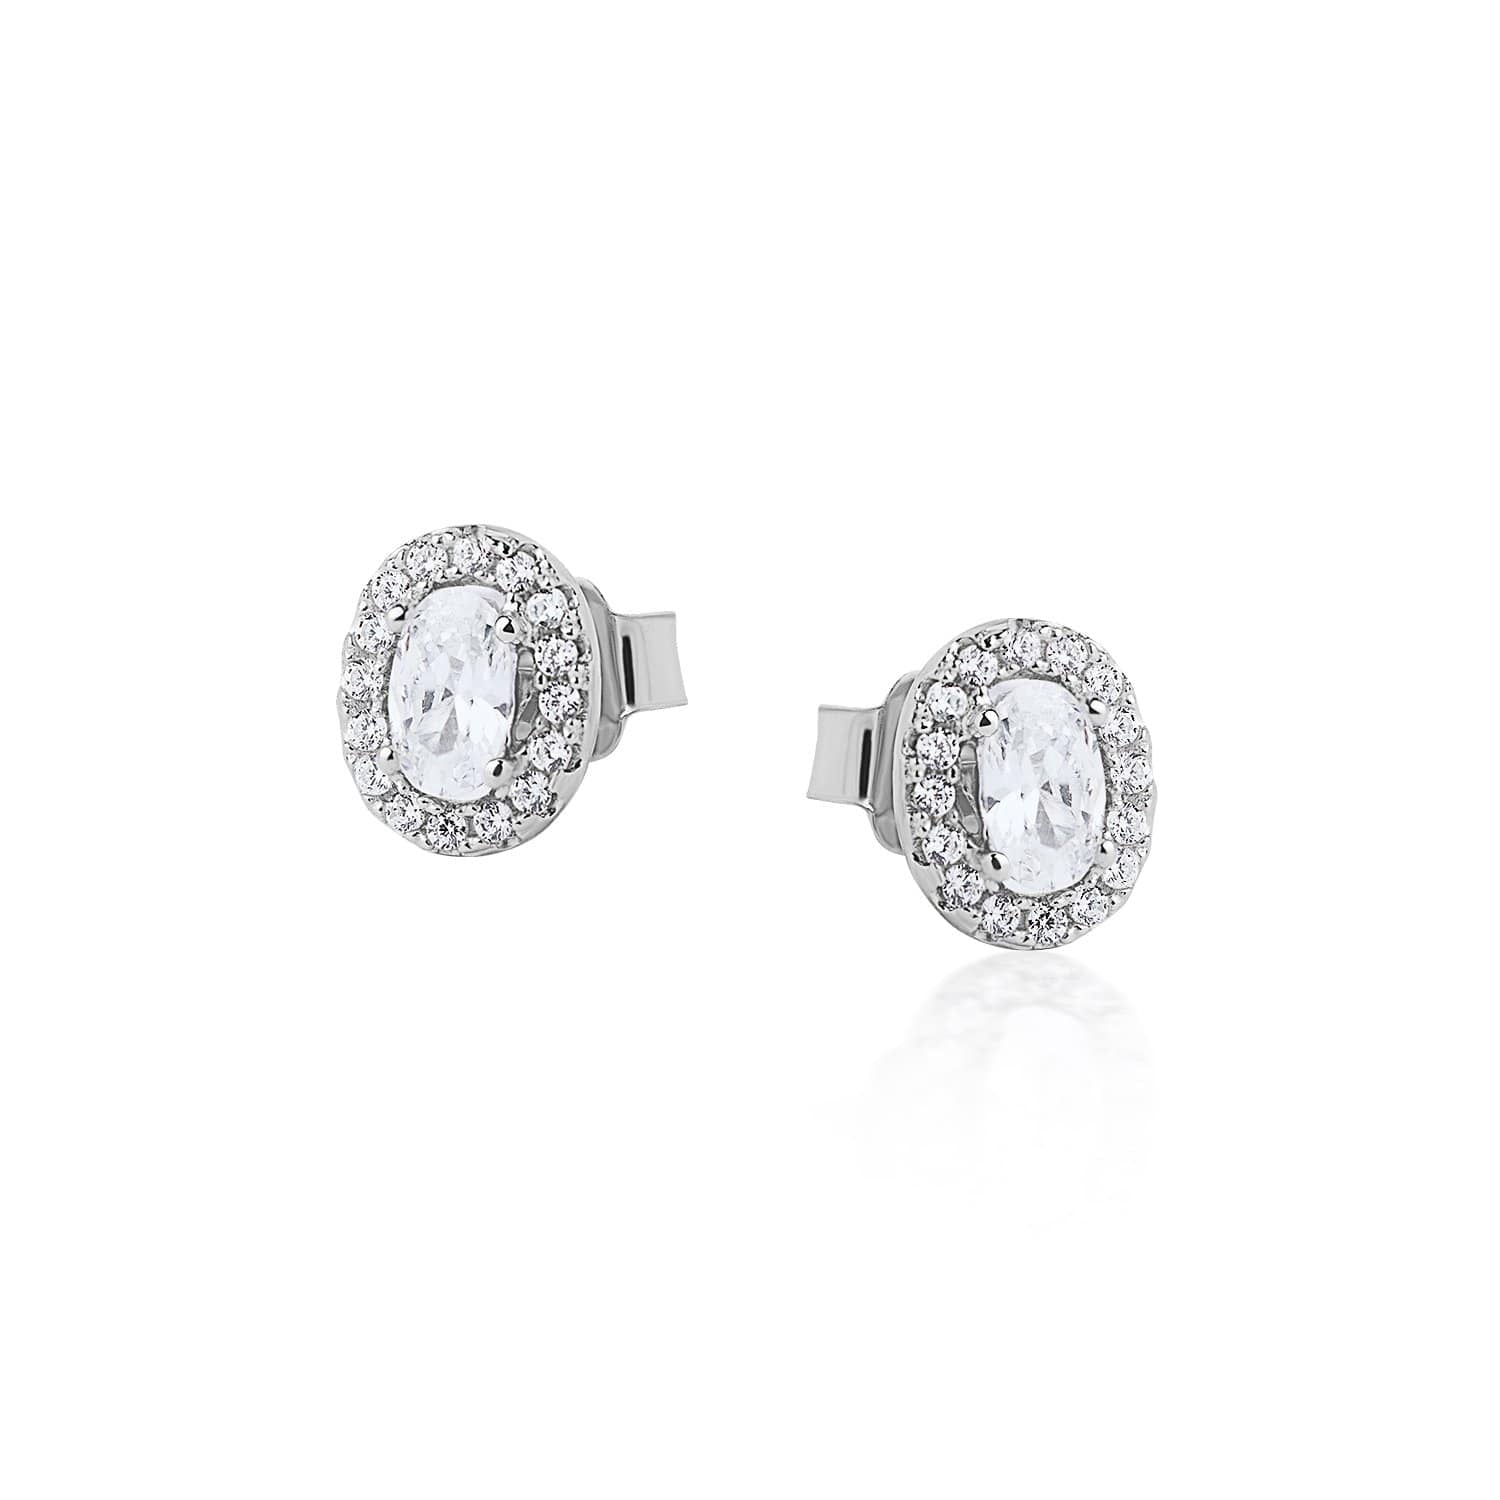 Lynora Jewellery Earring Sterling Silver Clear Oval studs Sterling Silver